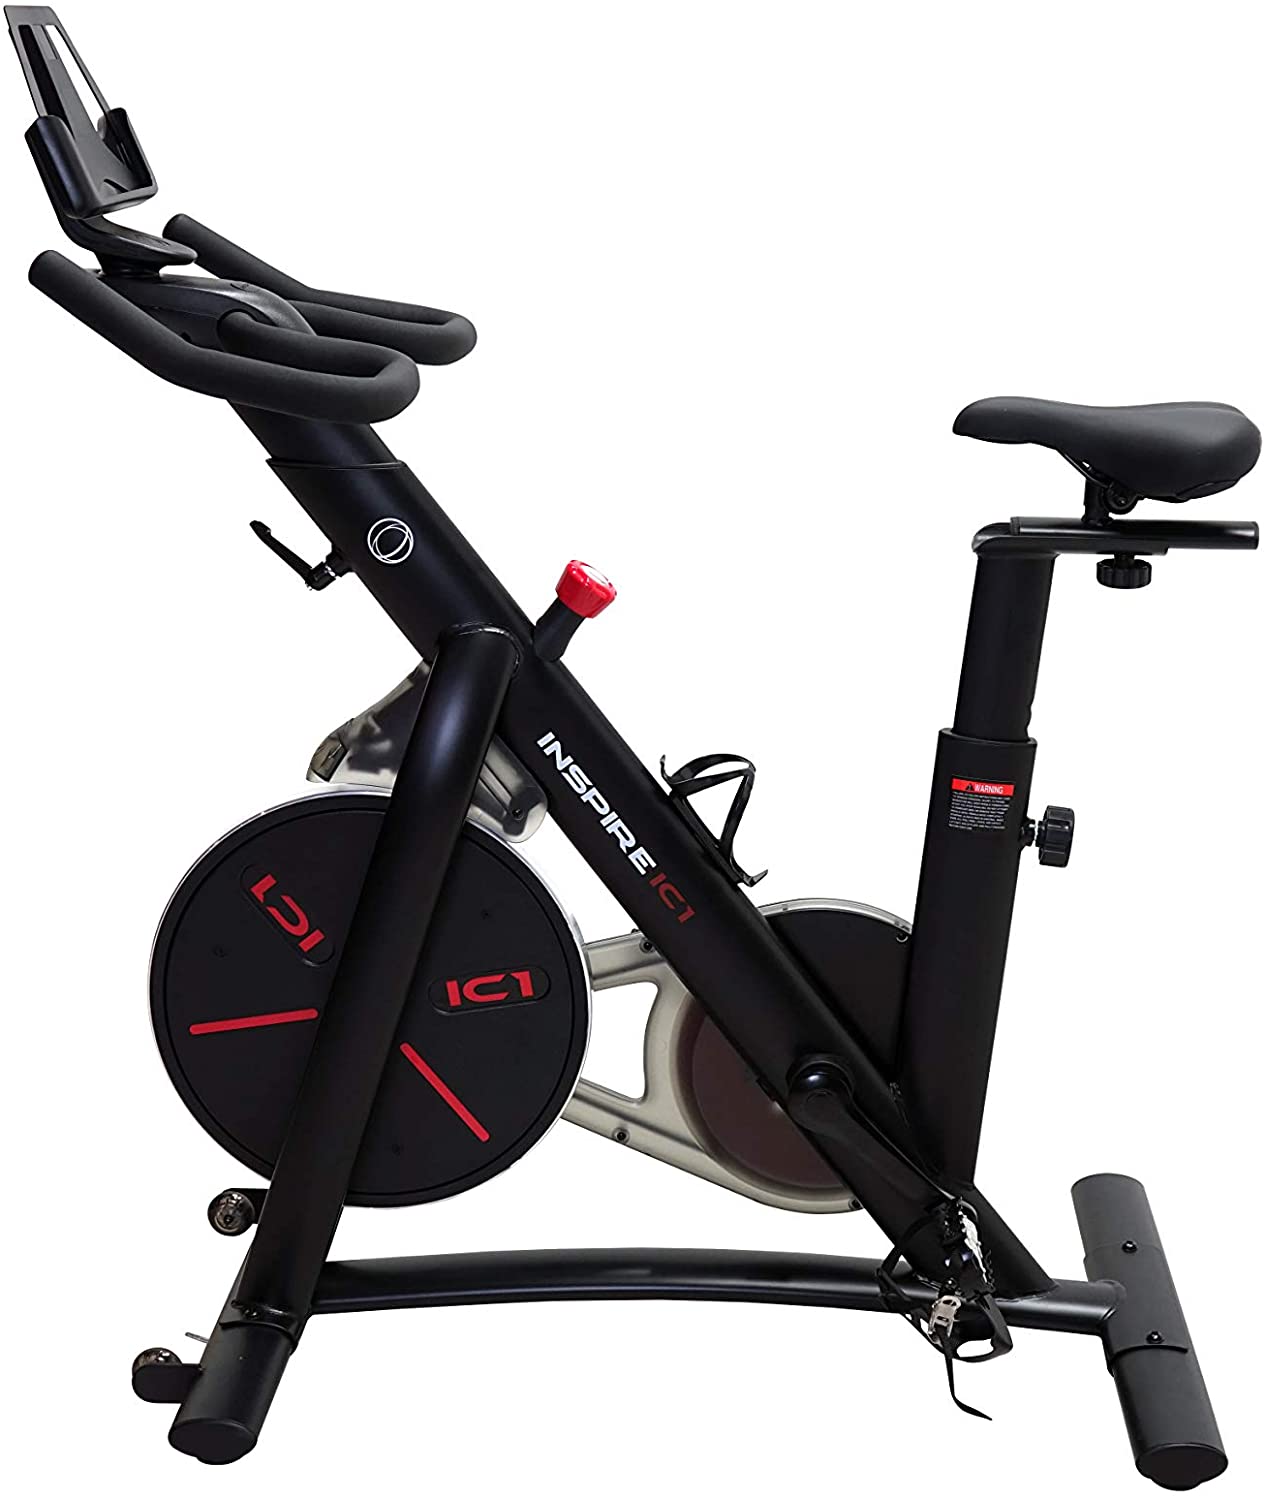 Inspire Fitness IC 1.5 Indoor Cycle | Prosportsae